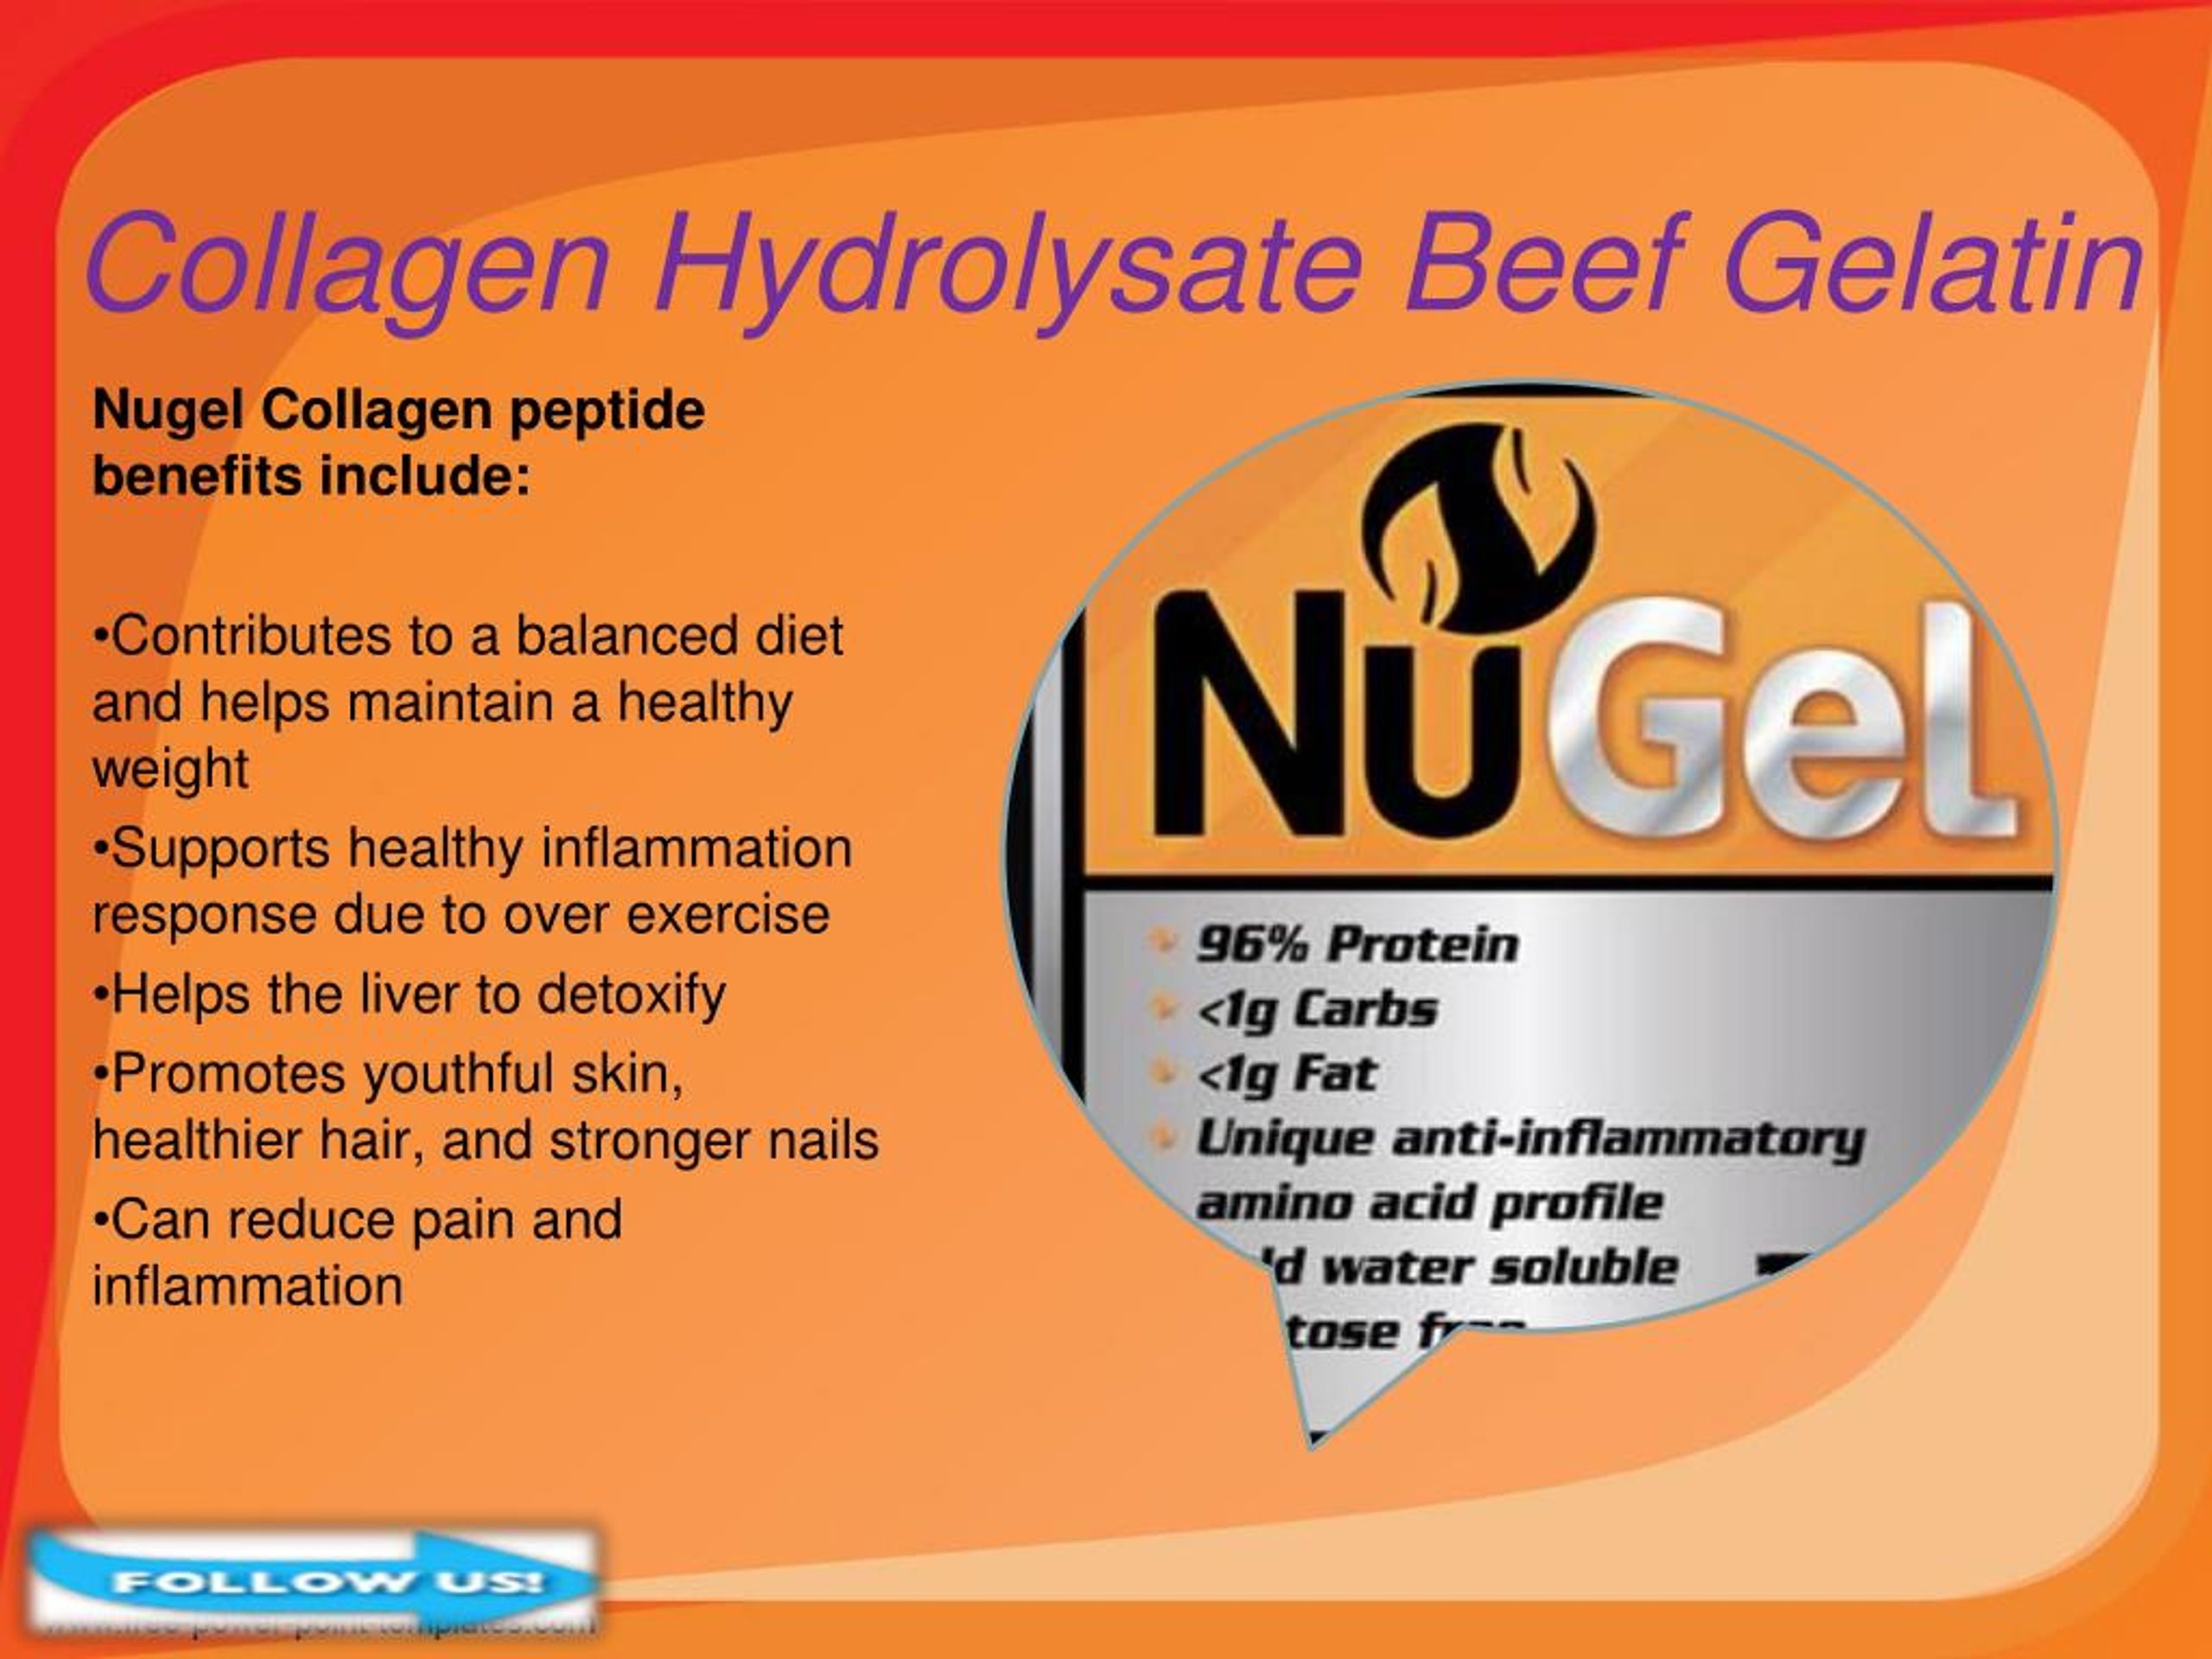 benefits of great lakes gelatin collagen hydrolysate